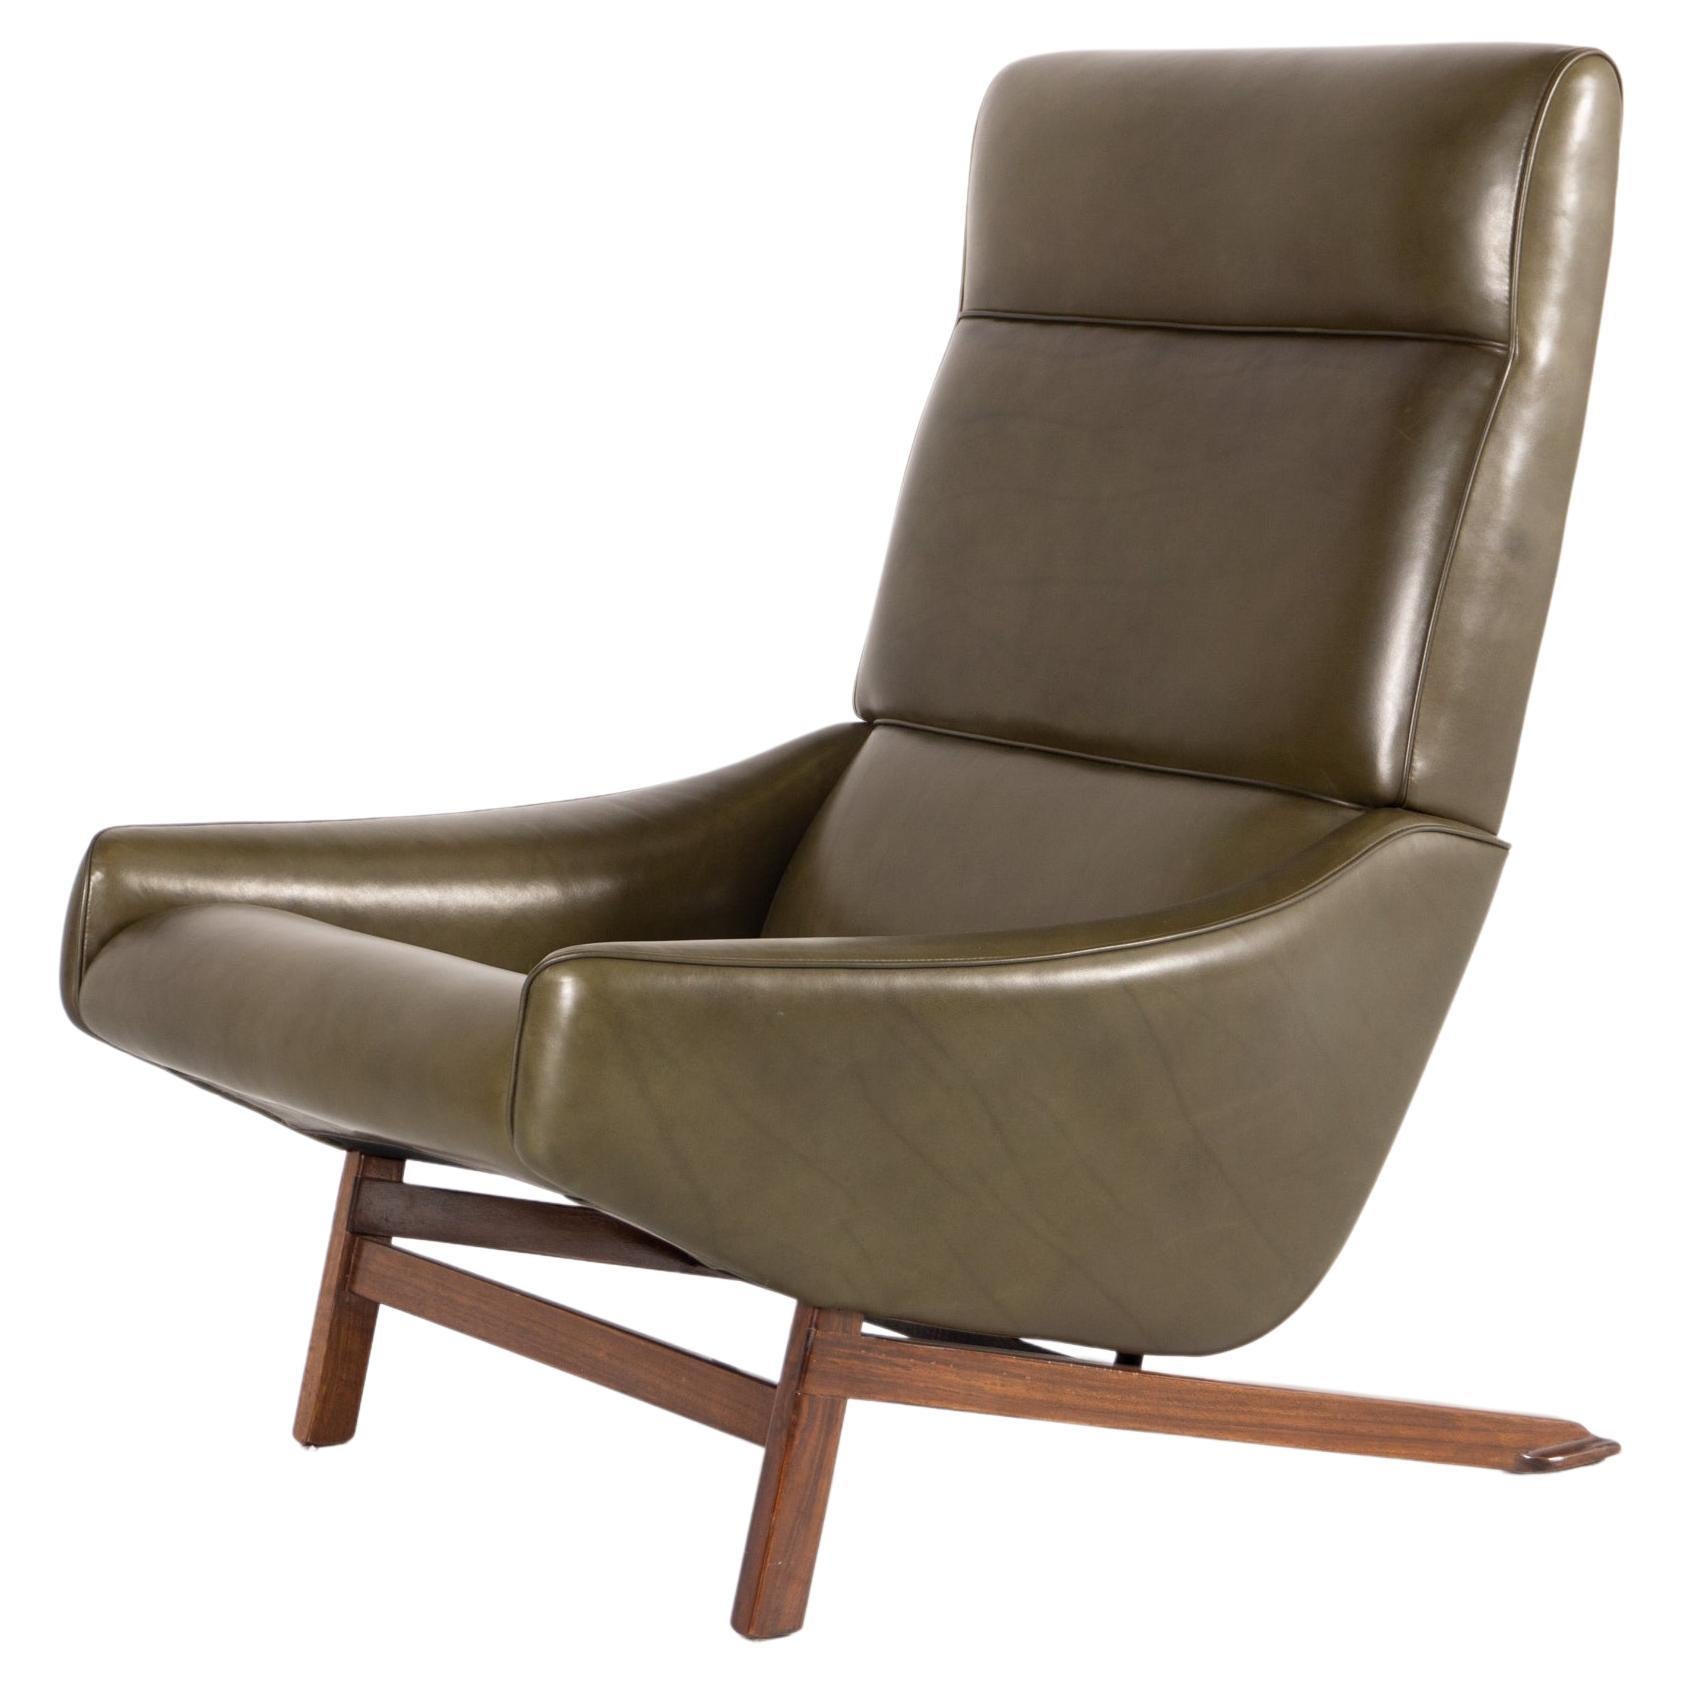 Armchair Designed by Gianfranco Frattini 1960 Model '880'